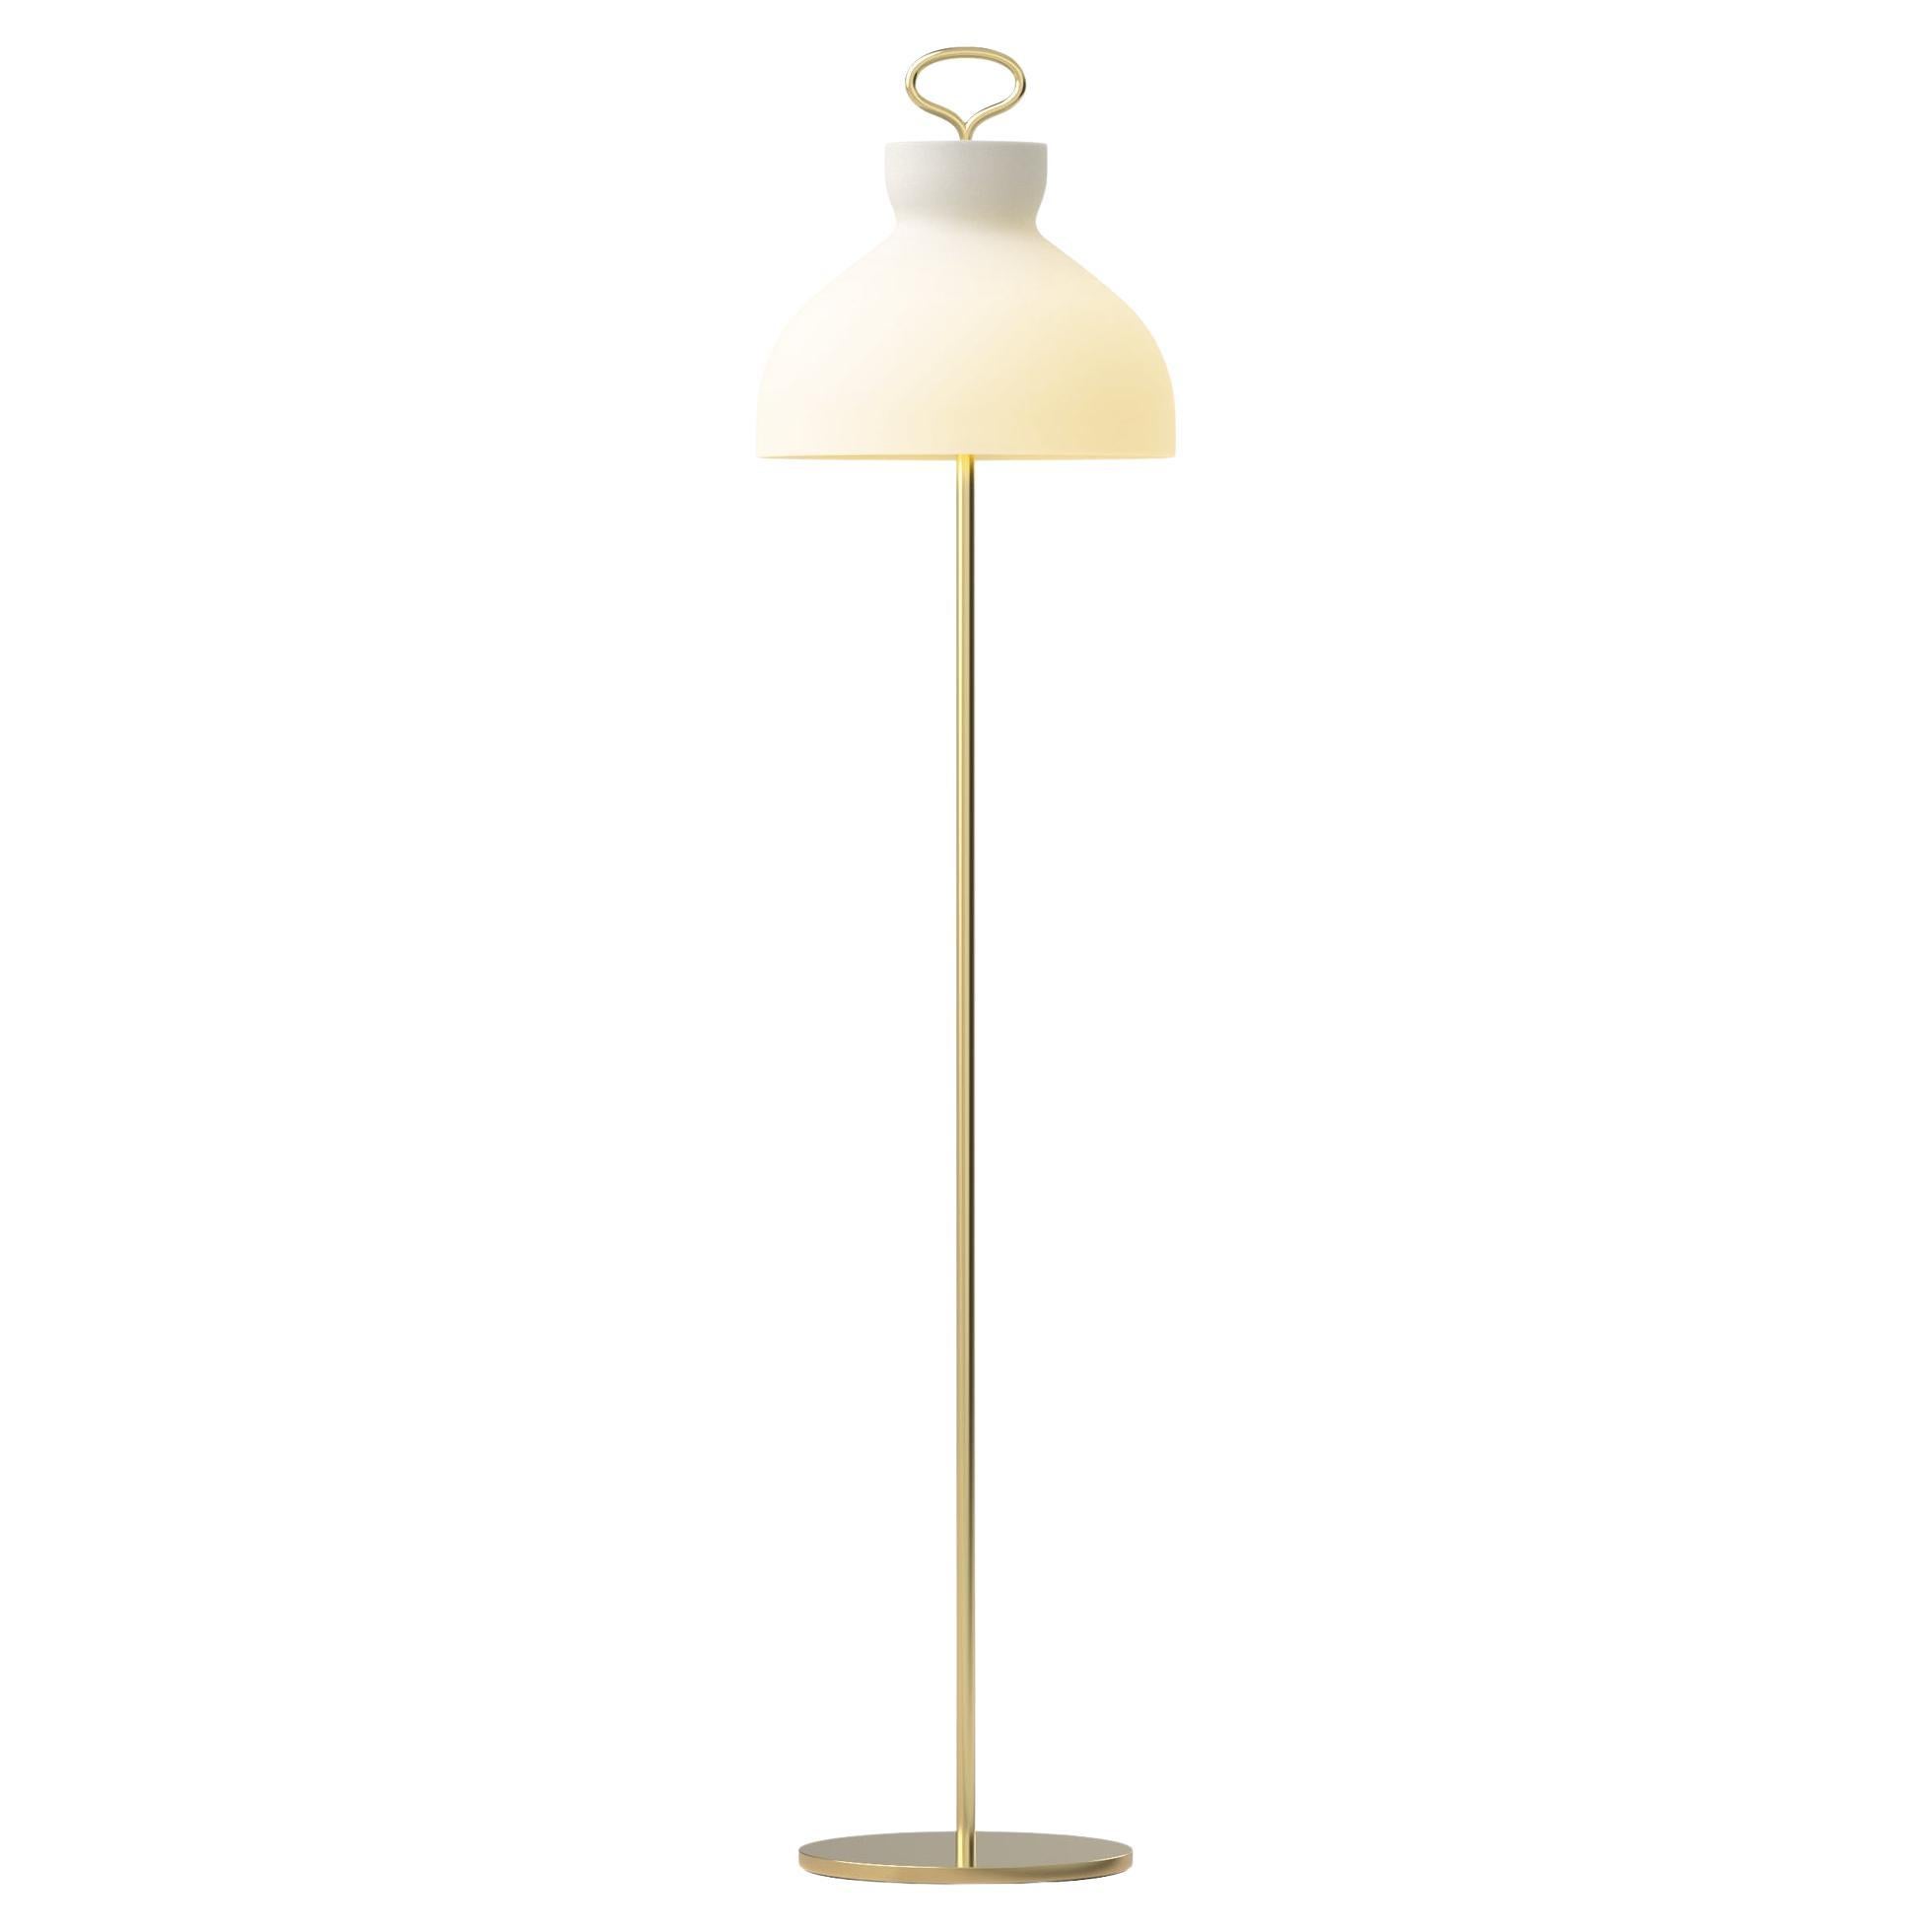 Ignazio Gardella 'Arenzano Terra' Floor Lamp in Brass and Glass For Sale